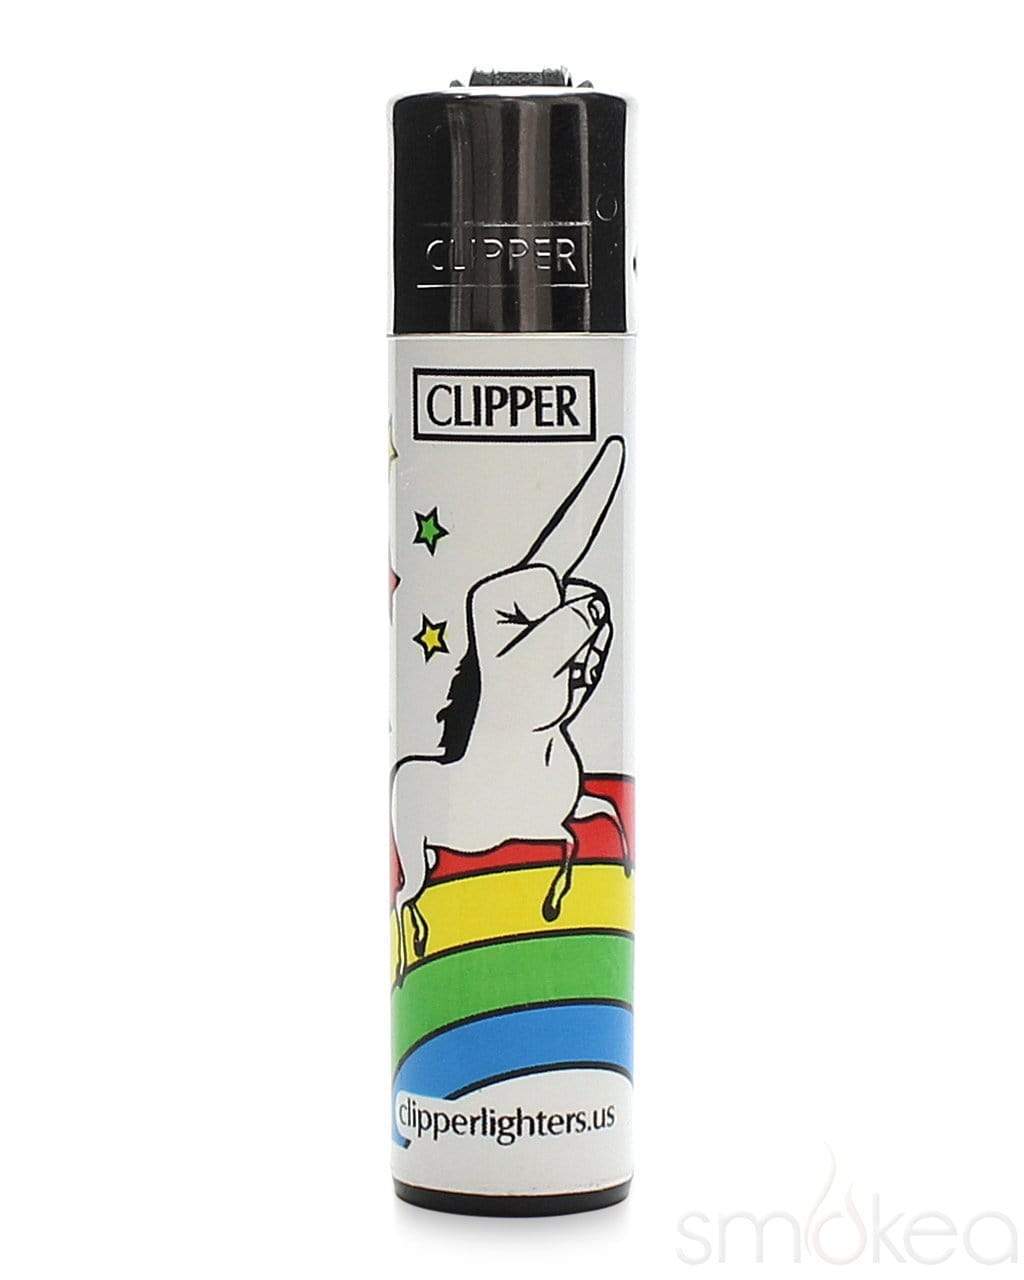 Mechero CLIPPER Classic Amazing Unicorn Rainbow 🦄